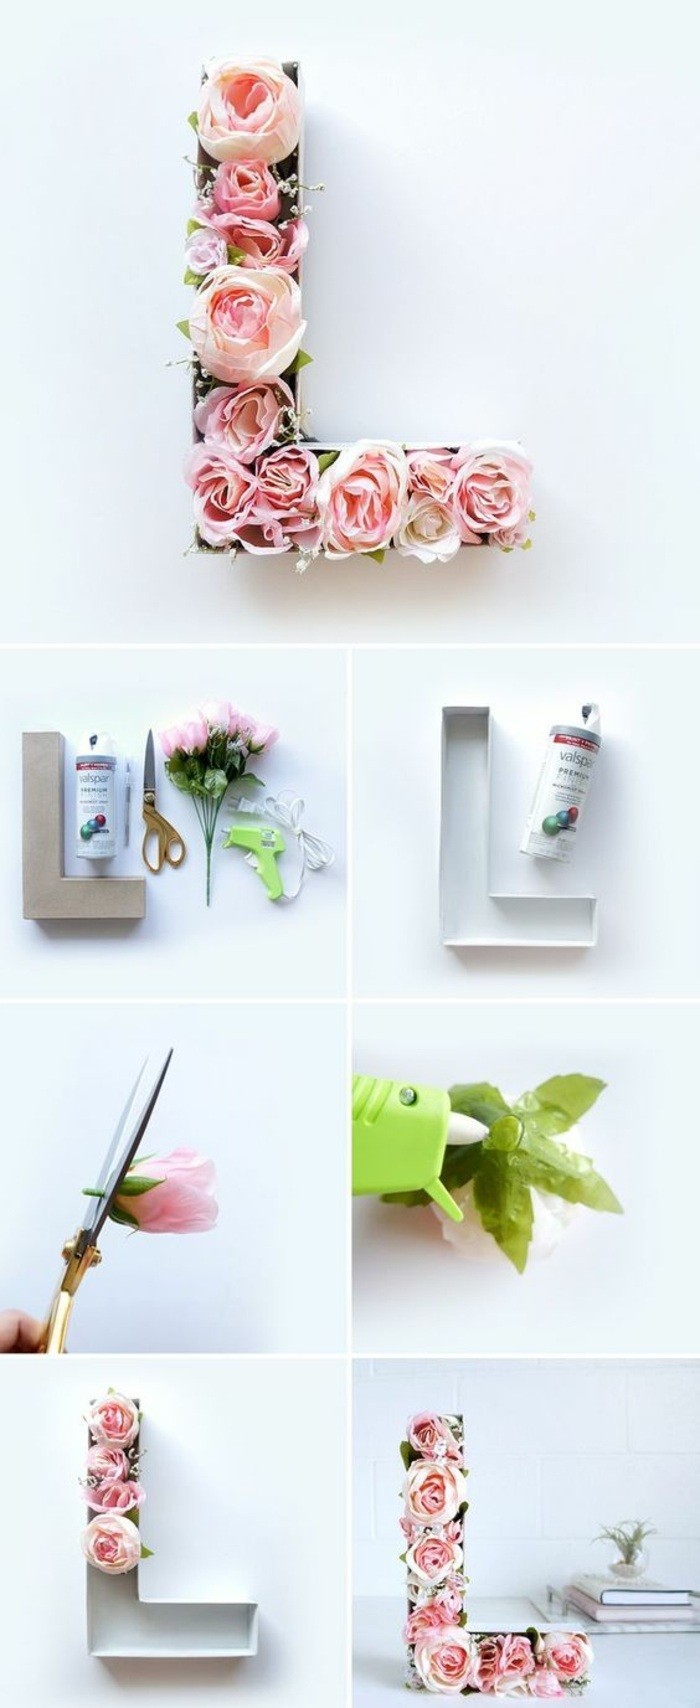 Wanddeko bricolaje de decisiones fruhlingsdeko-Tinker-carta-a-decorar-rosas